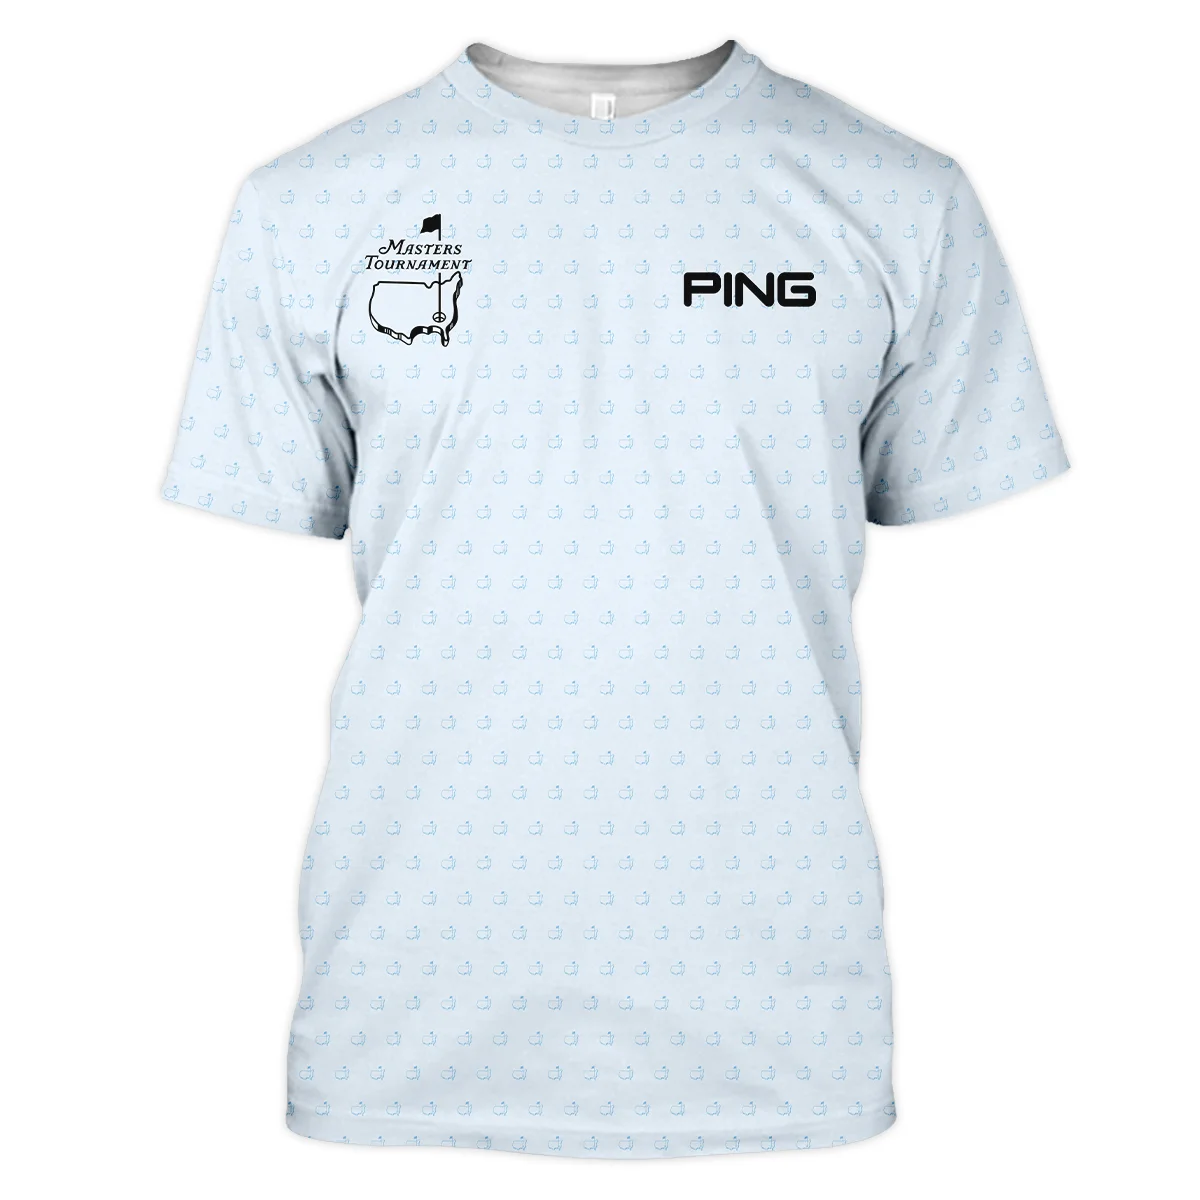 Pattern Masters Tournament Ping Zipper Hoodie Shirt White Light Blue Color Pattern Logo  Zipper Hoodie Shirt